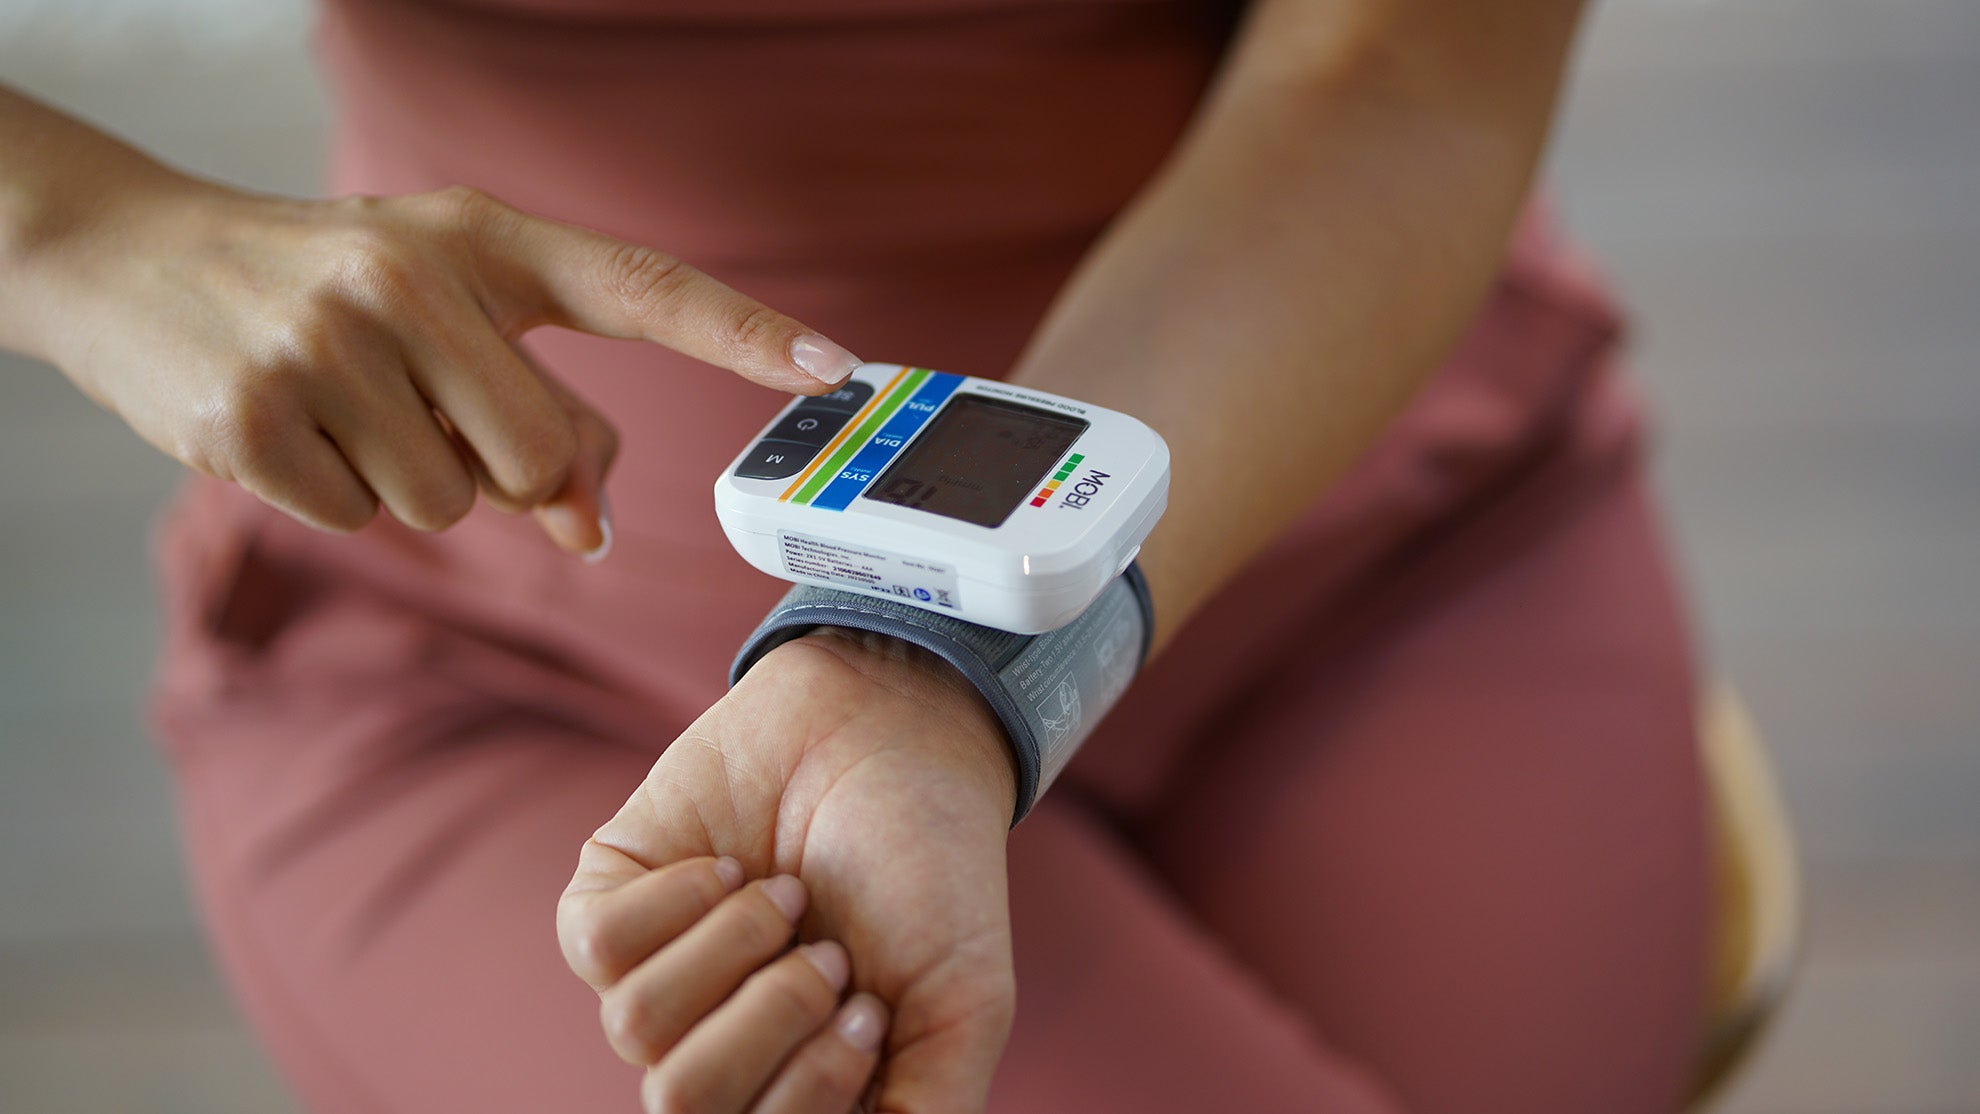 Digital Wrist Blood Pressure Monitor, Bluetooth connectivity